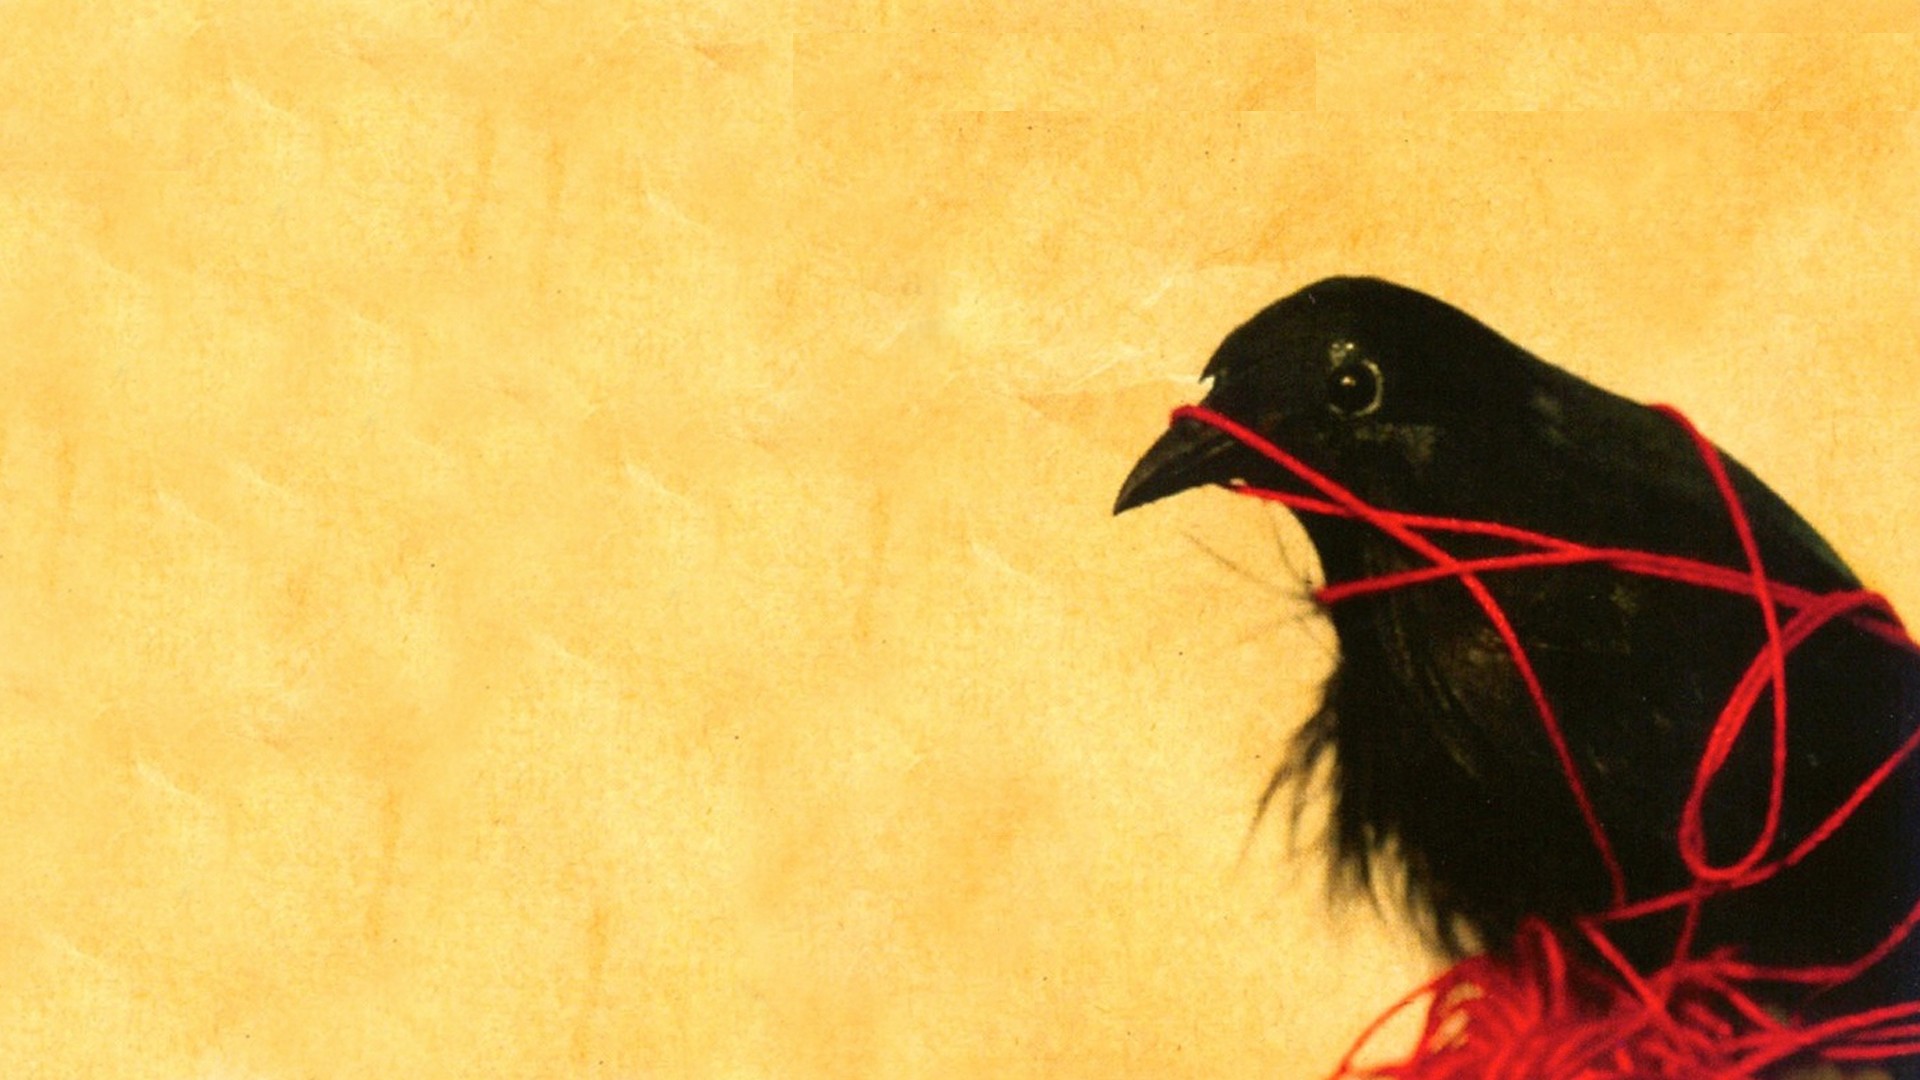 Music Album Covers Death Cab For Cutie Animals Raven 1920x1080